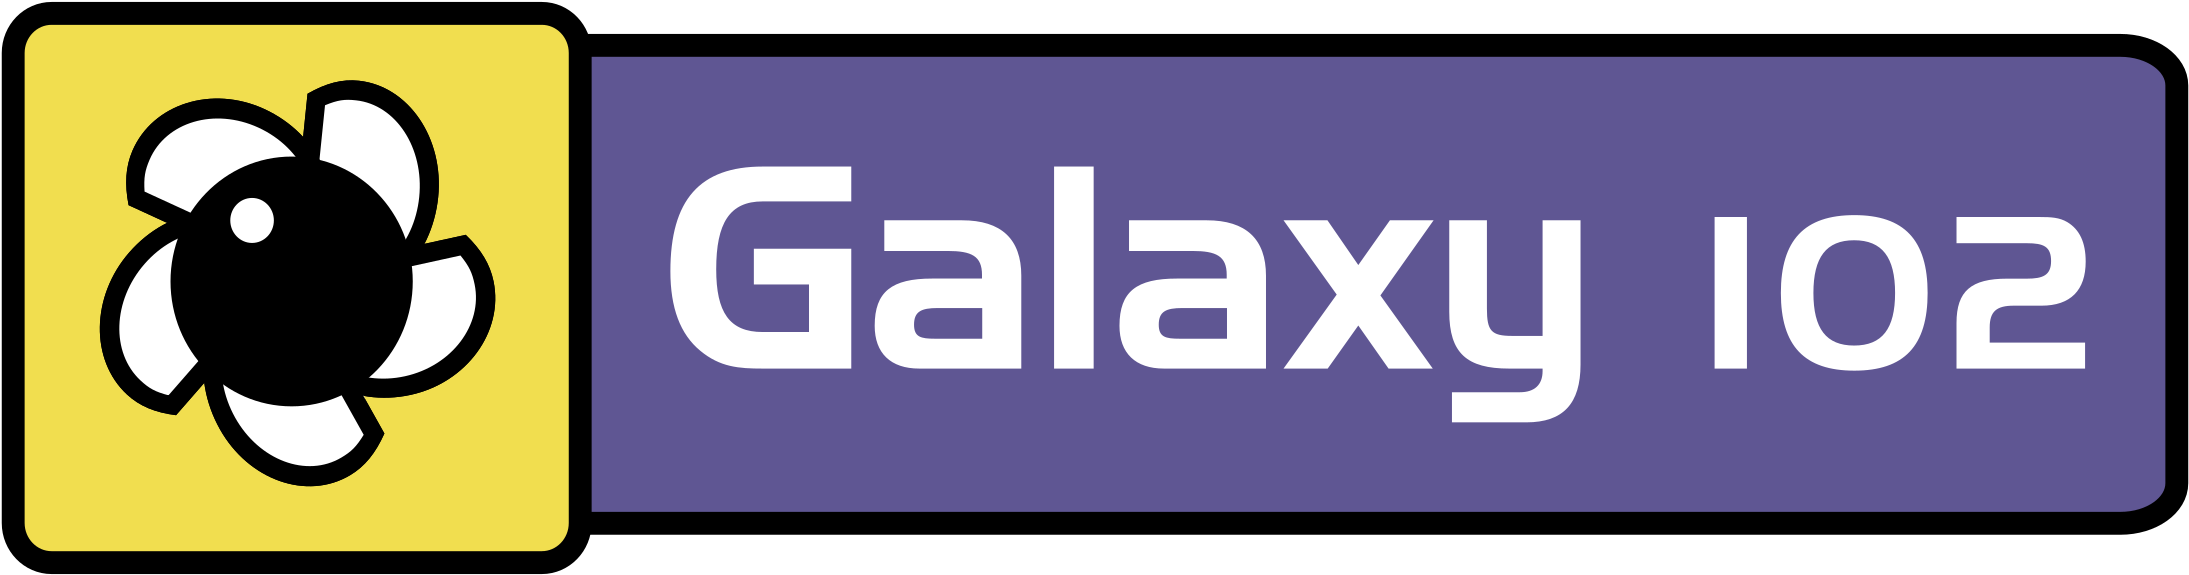 Galaxy 102 Logo Png Transparent - Galaxy 101 (2400x2400), Png Download